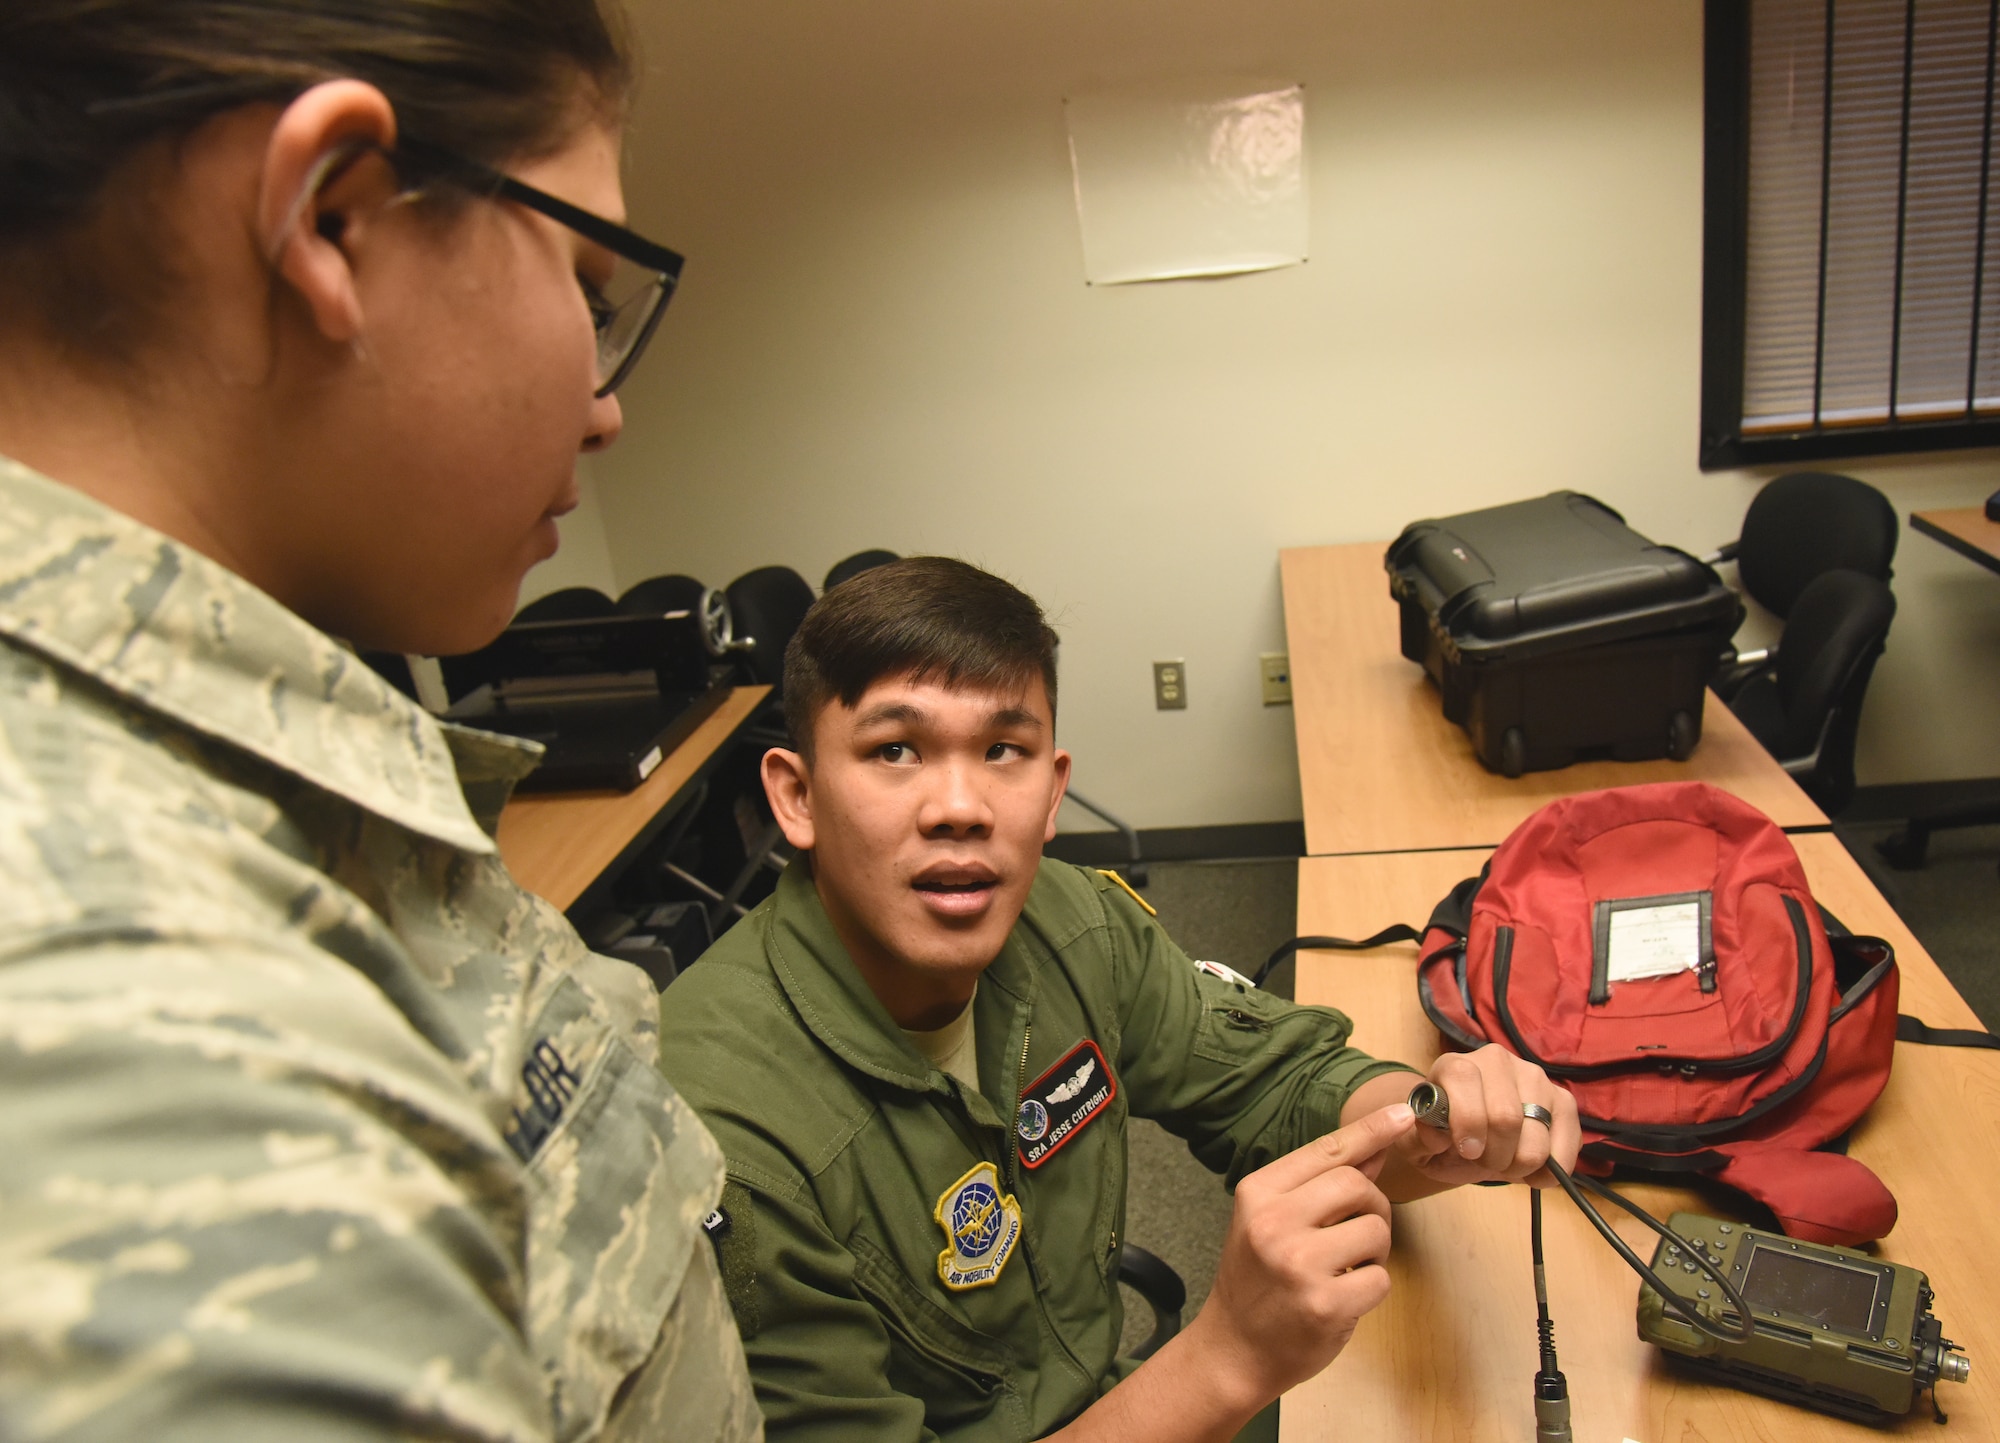 Combat crew communications ensure mission security